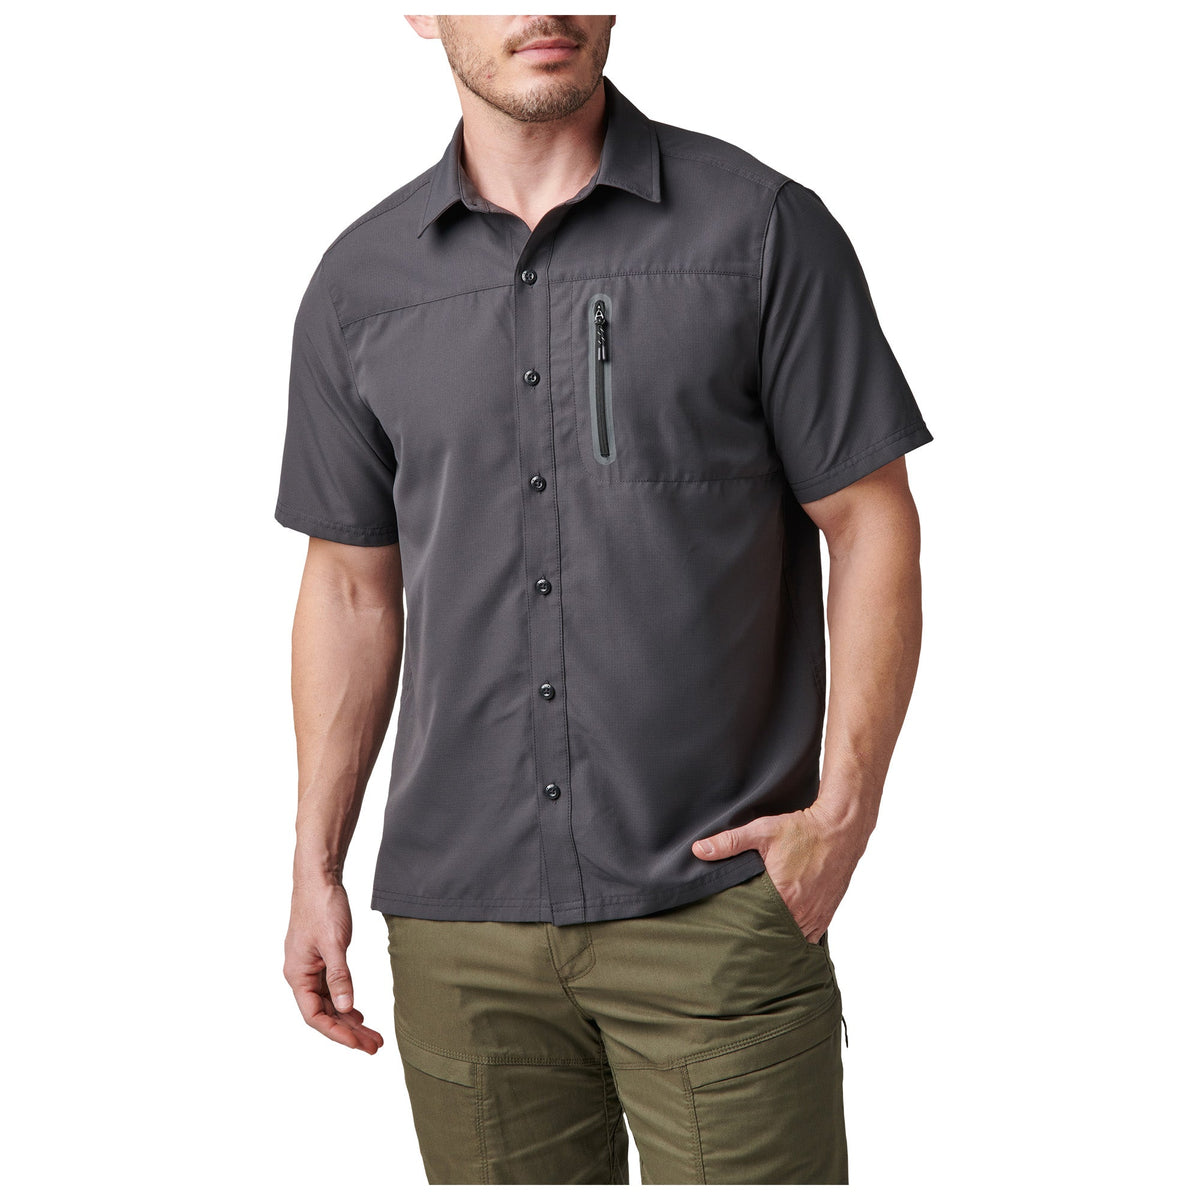 5.11 Tactical Marksman Utility Short Sleeve Shirt Tactical Gear Australia Supplier Distributor Dealer